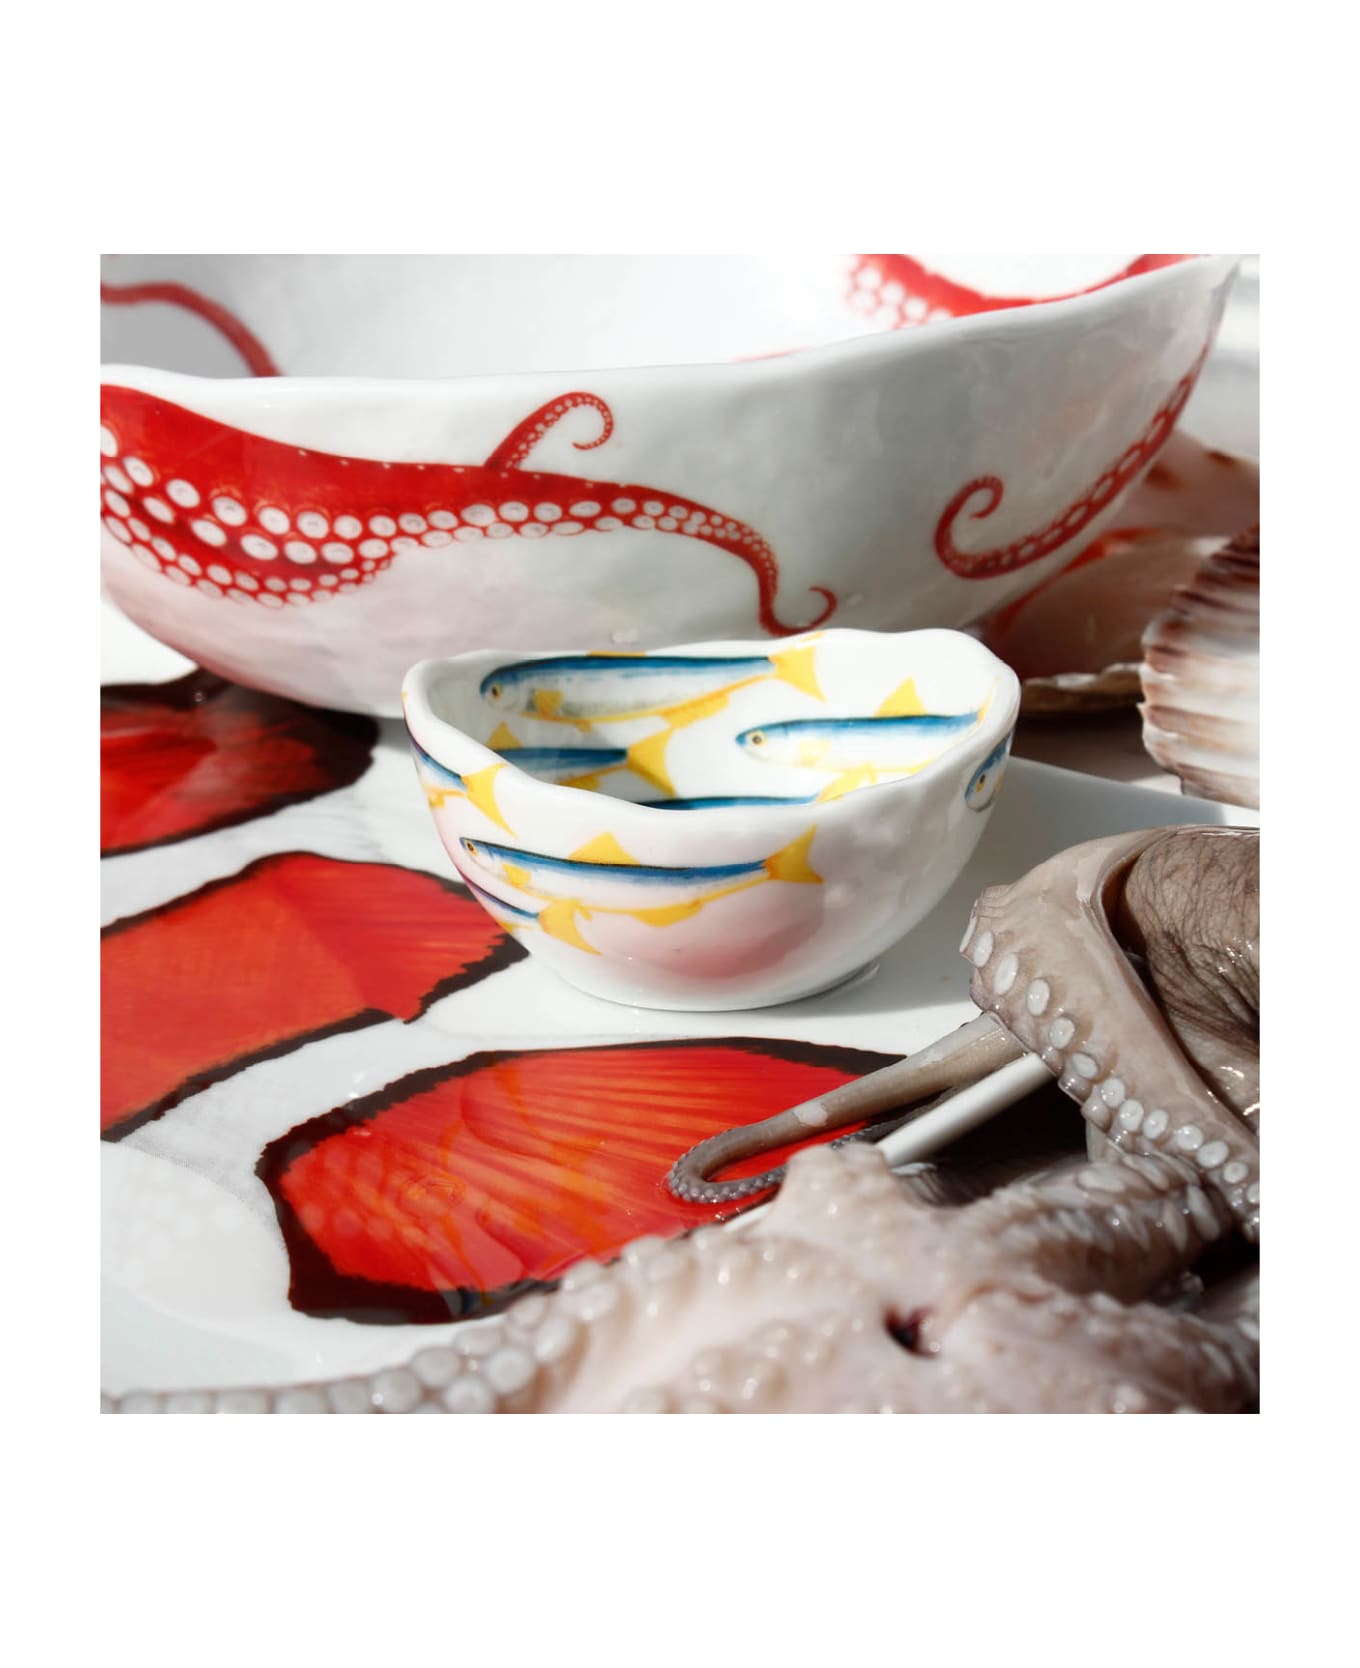 Taitù Medium Bowl POLPO - Dieta Mediterranea Fish Collection - Red